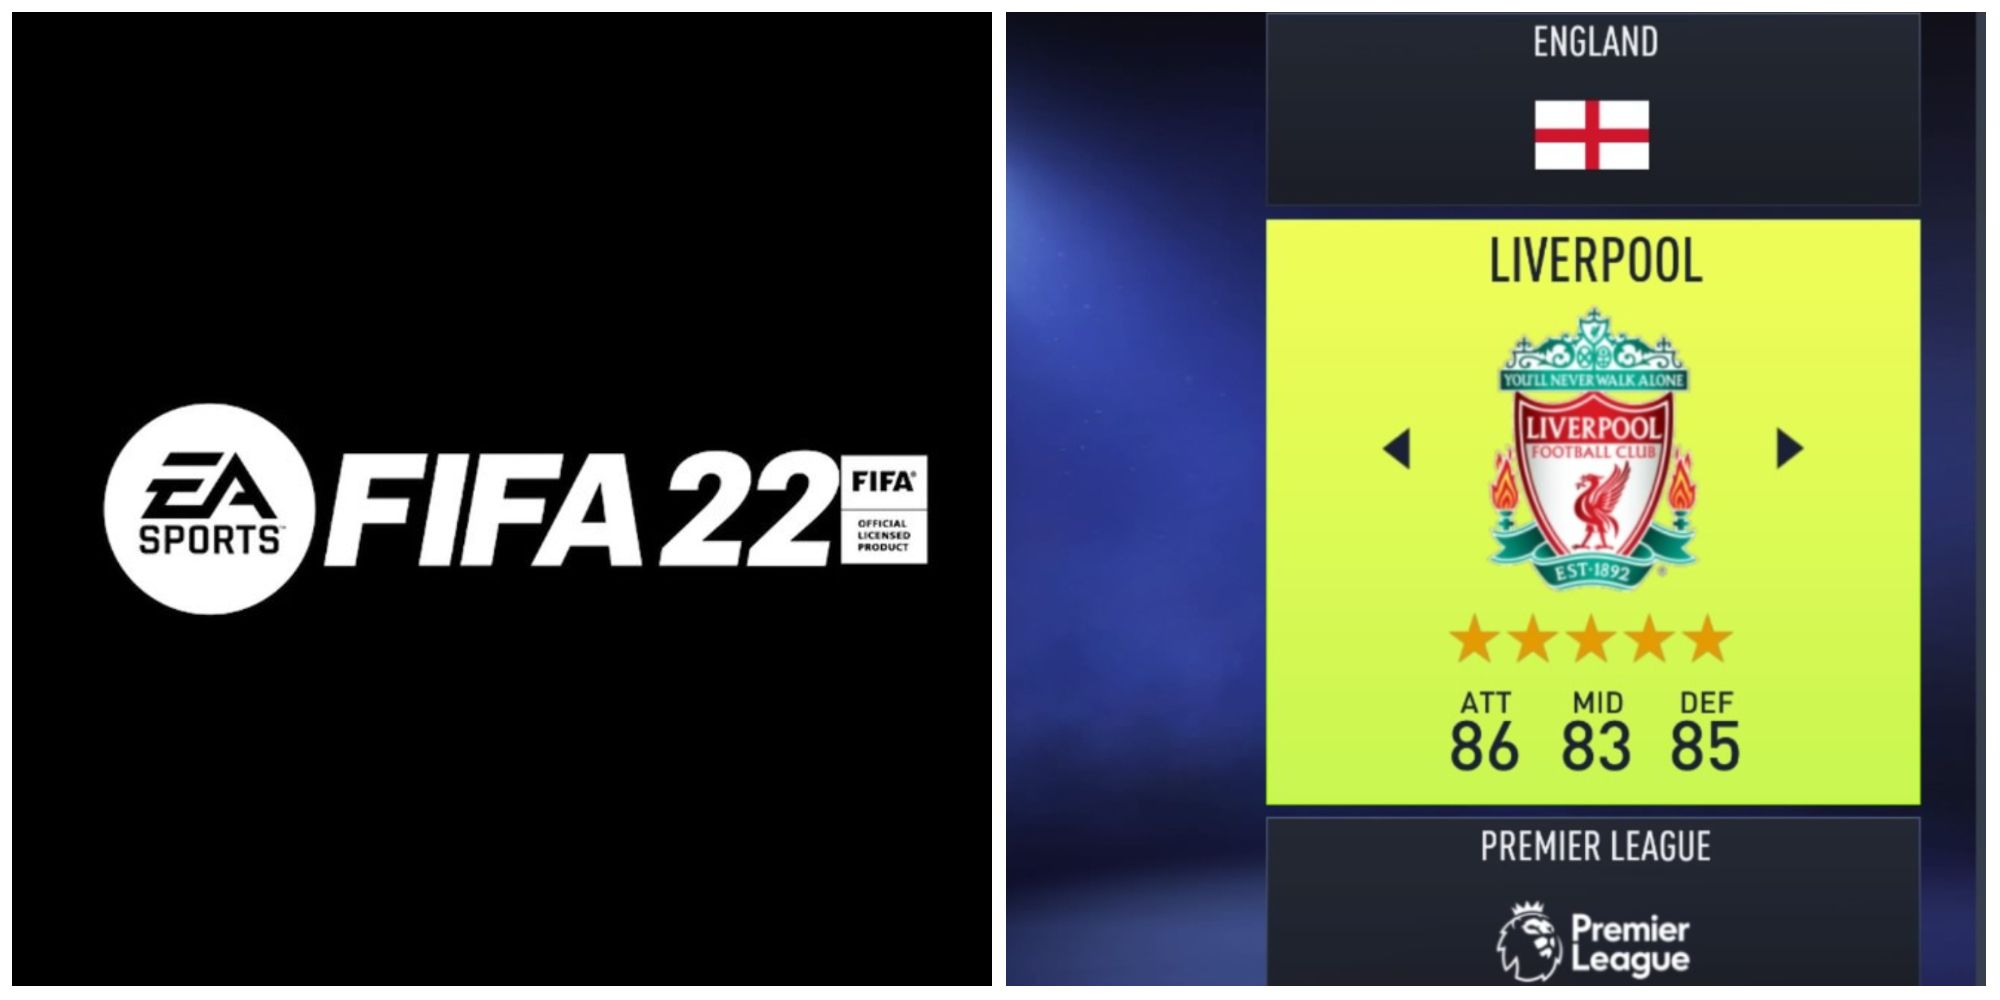 Fifa 22 Logo split image with Liverpool logo in Fifa 22 menus